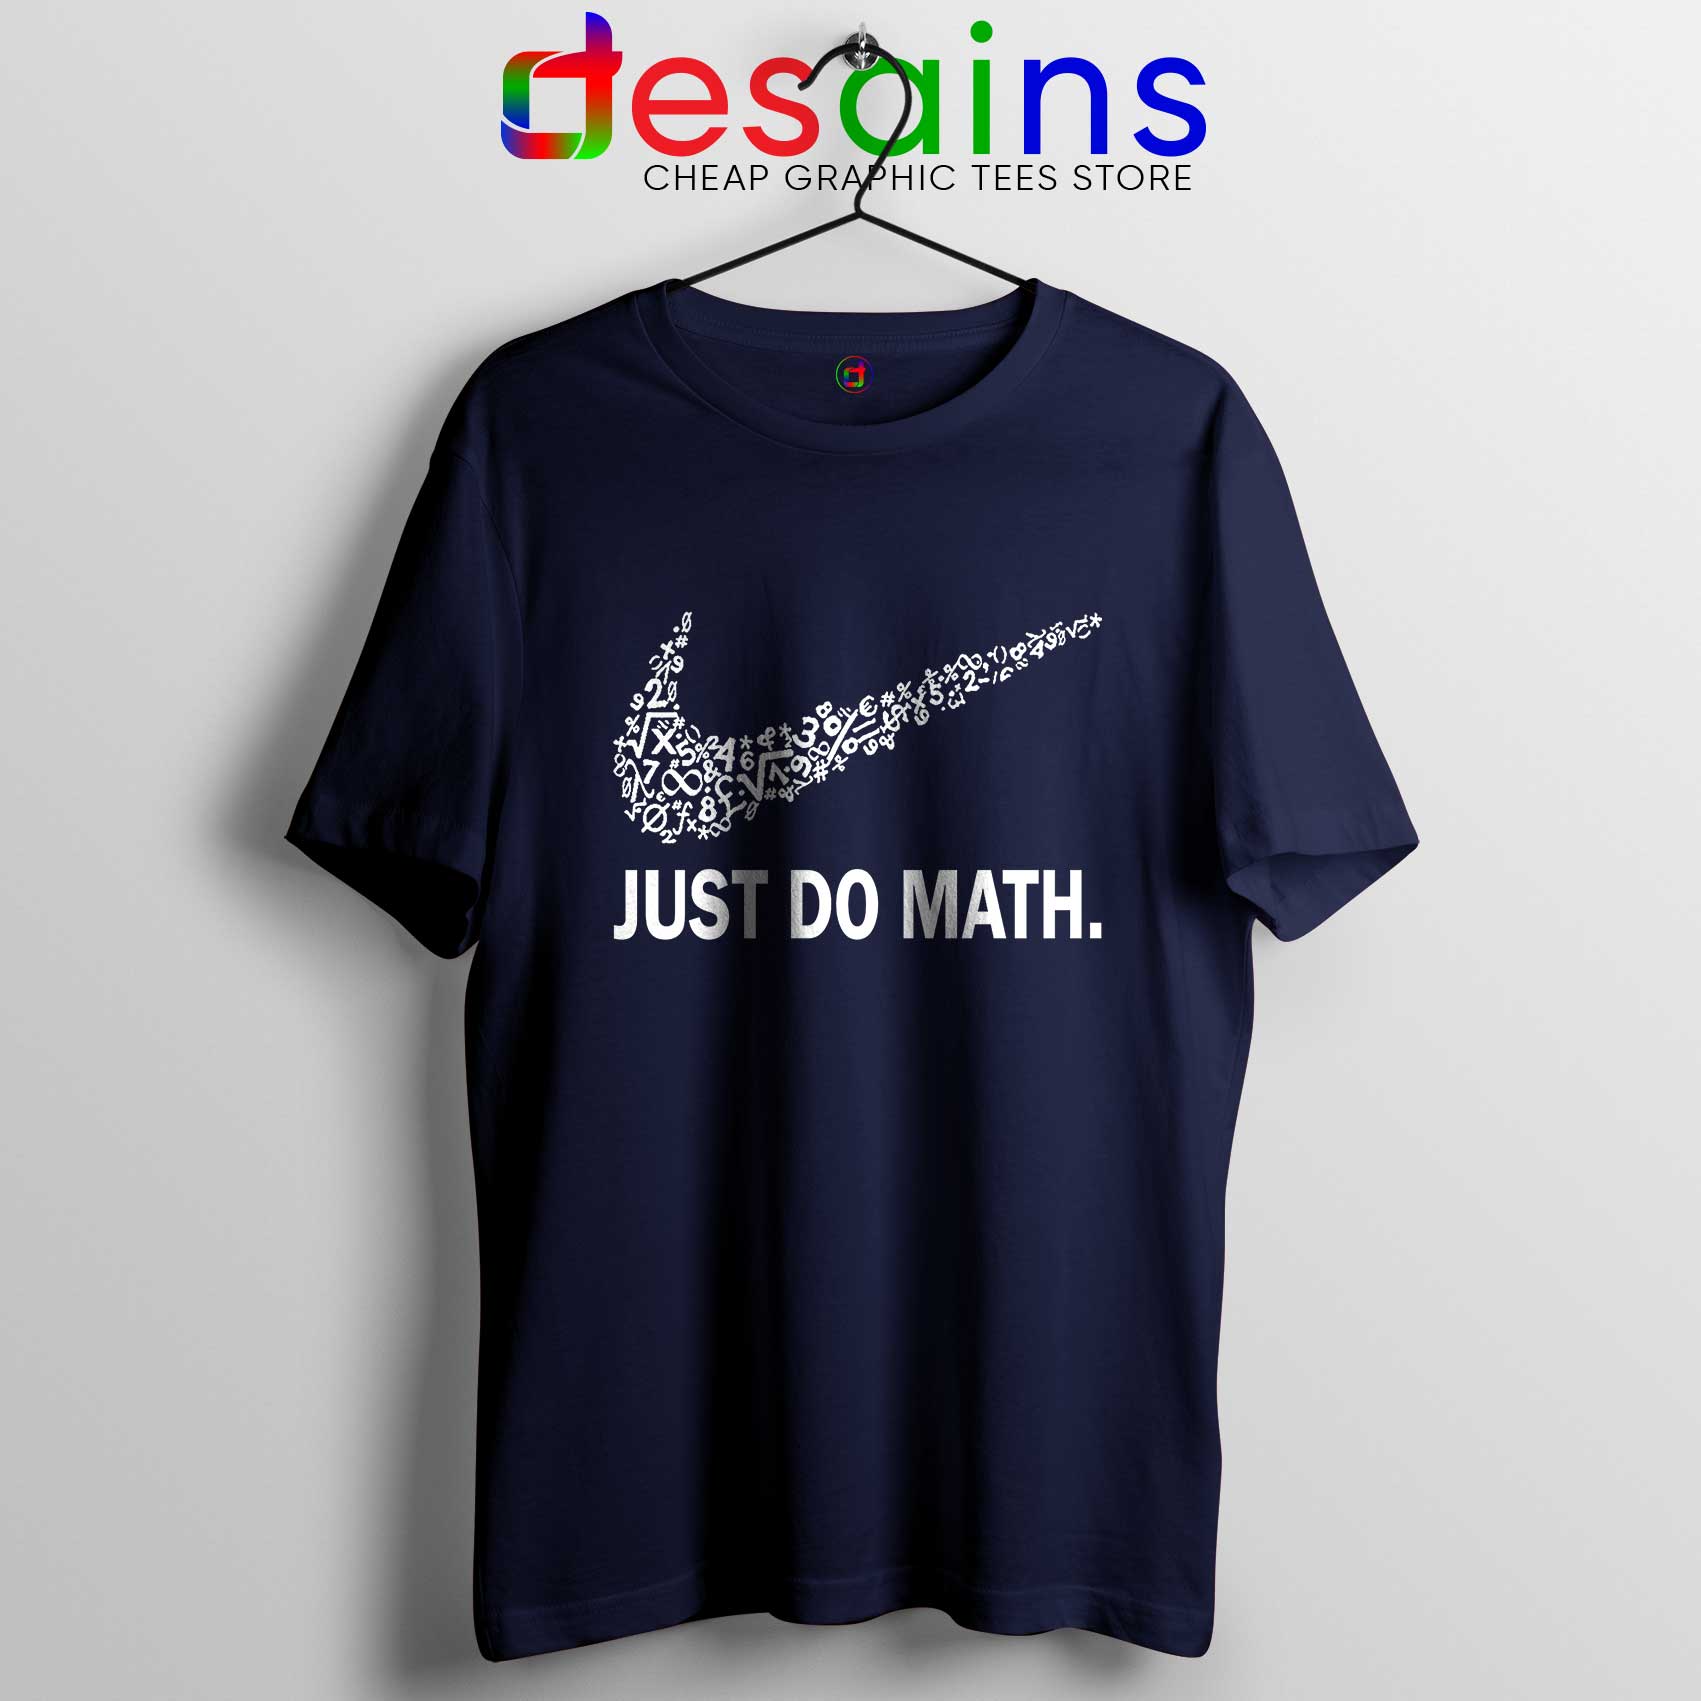 Just Do Math Tee Shirt Just Do It Nike Parody Cheap Graphic Tee